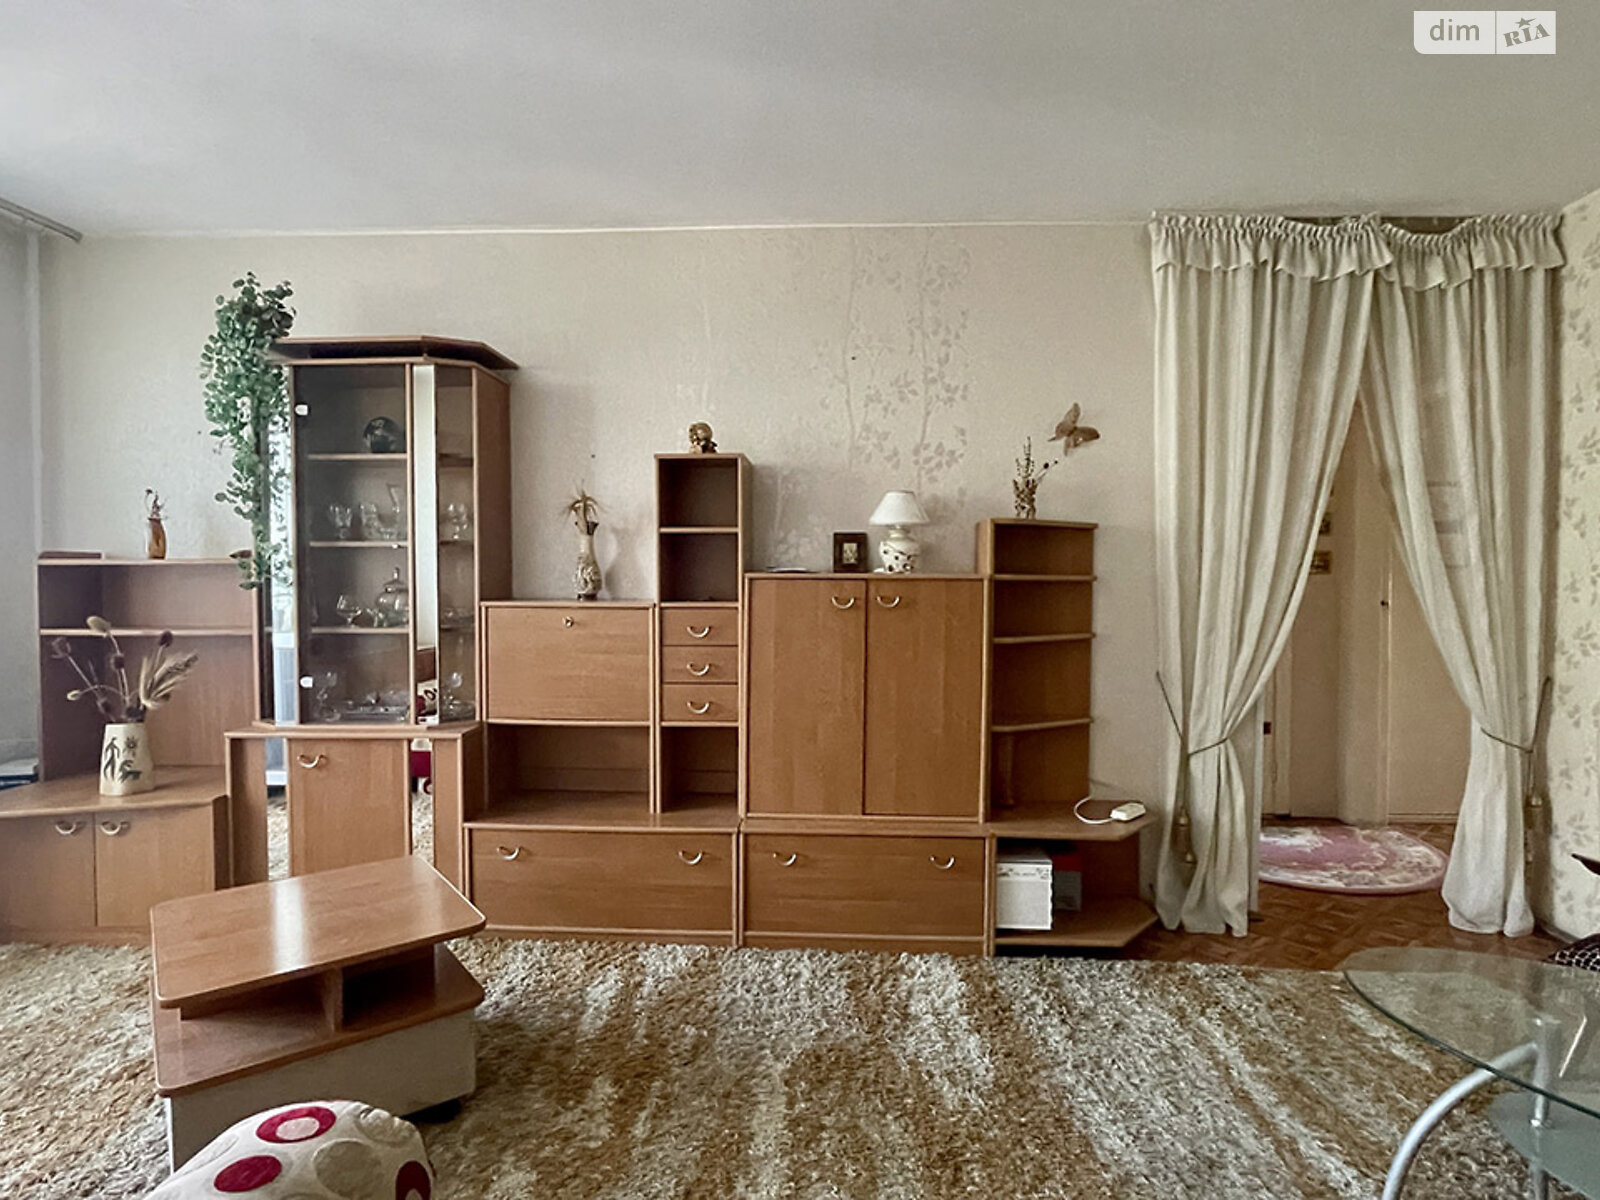 Продажа трехкомнатной квартиры в Николаеве, на ул. Строителей 18, район Проспект Мира фото 1